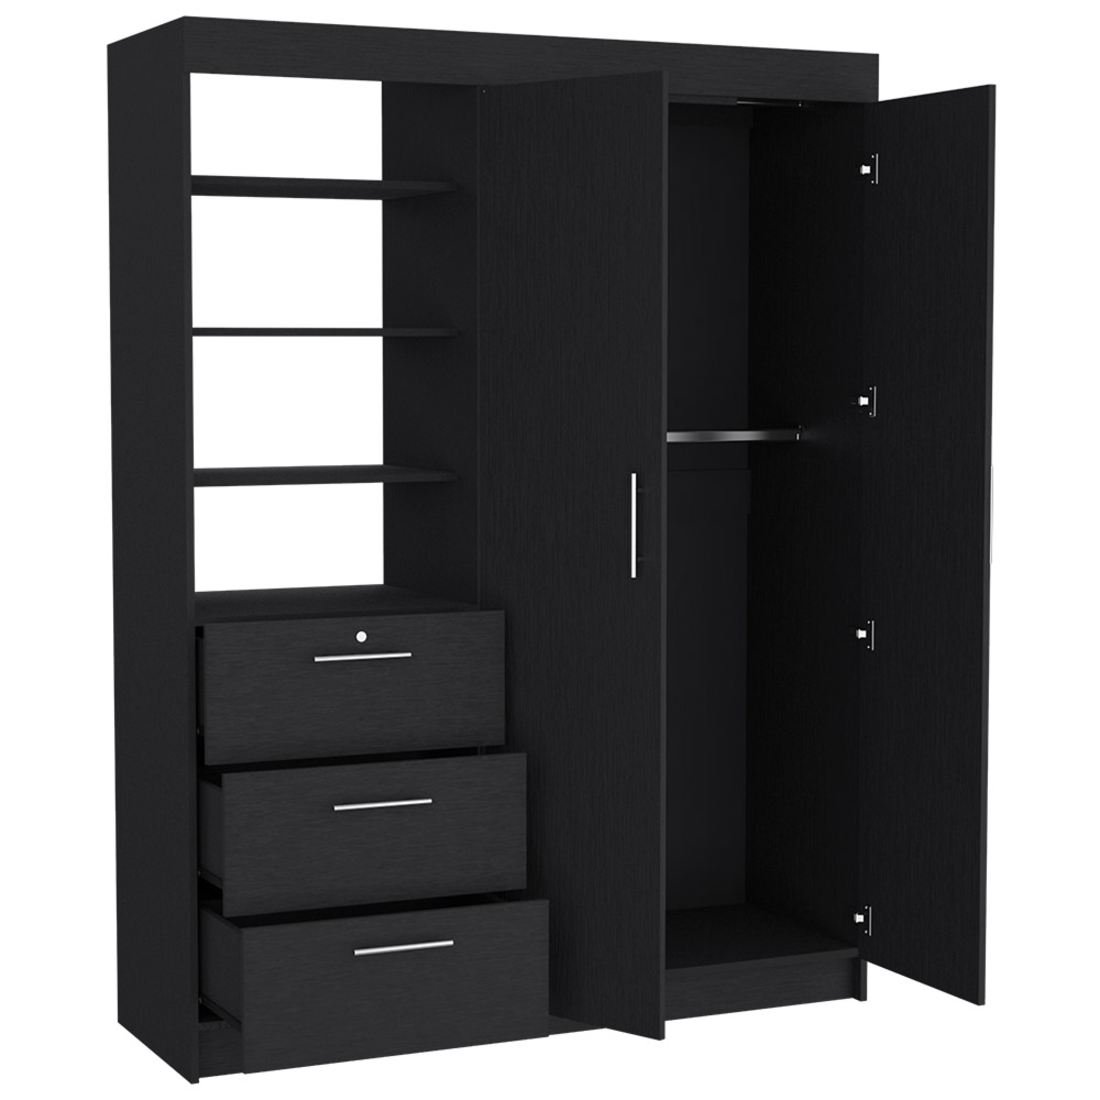 59" Black Three Drawer Dresser